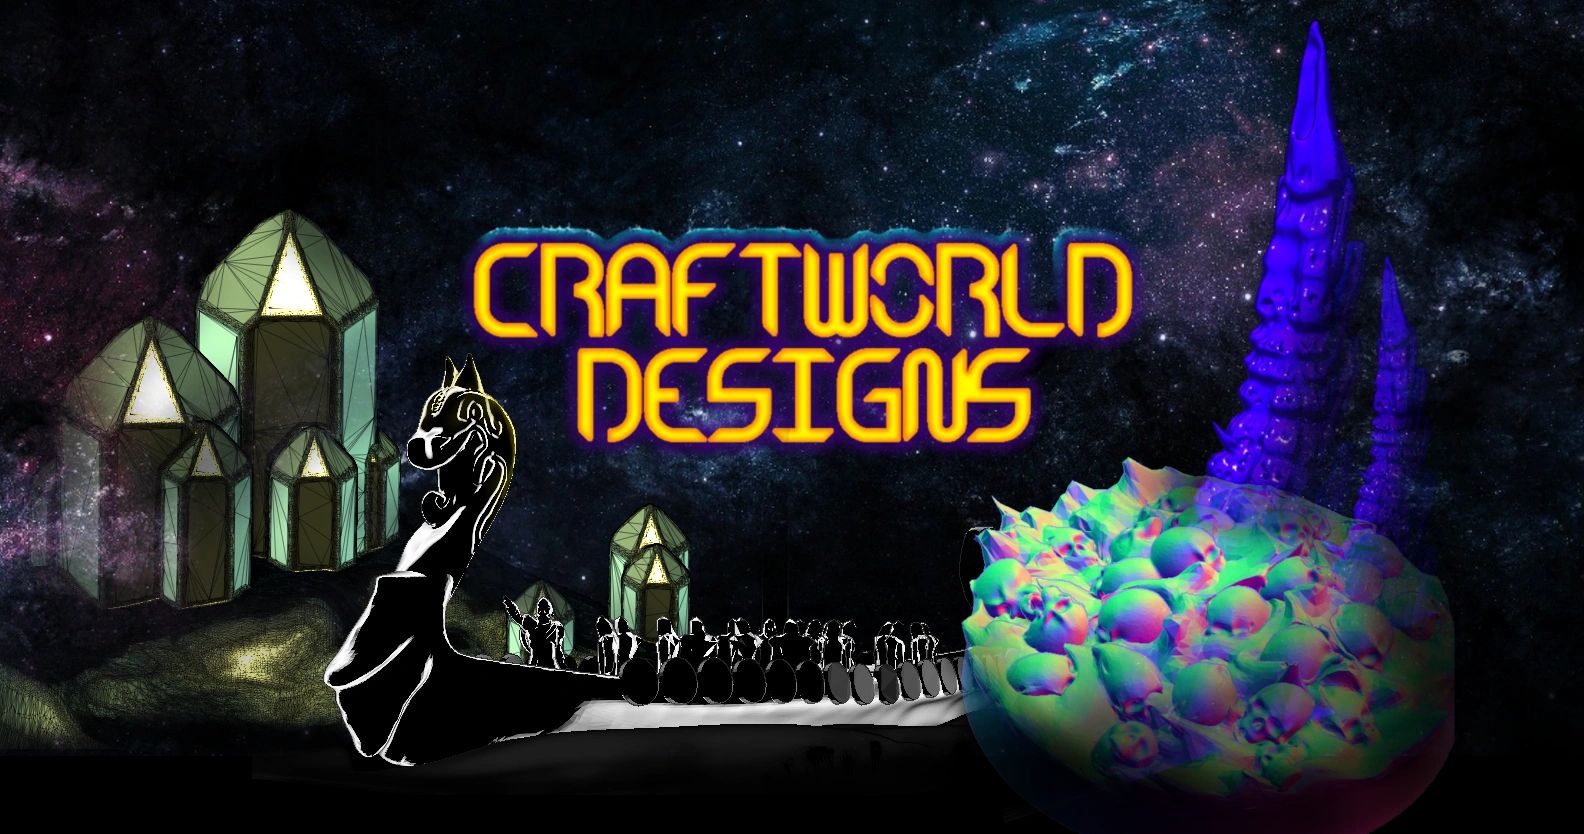 About – CraftWorld